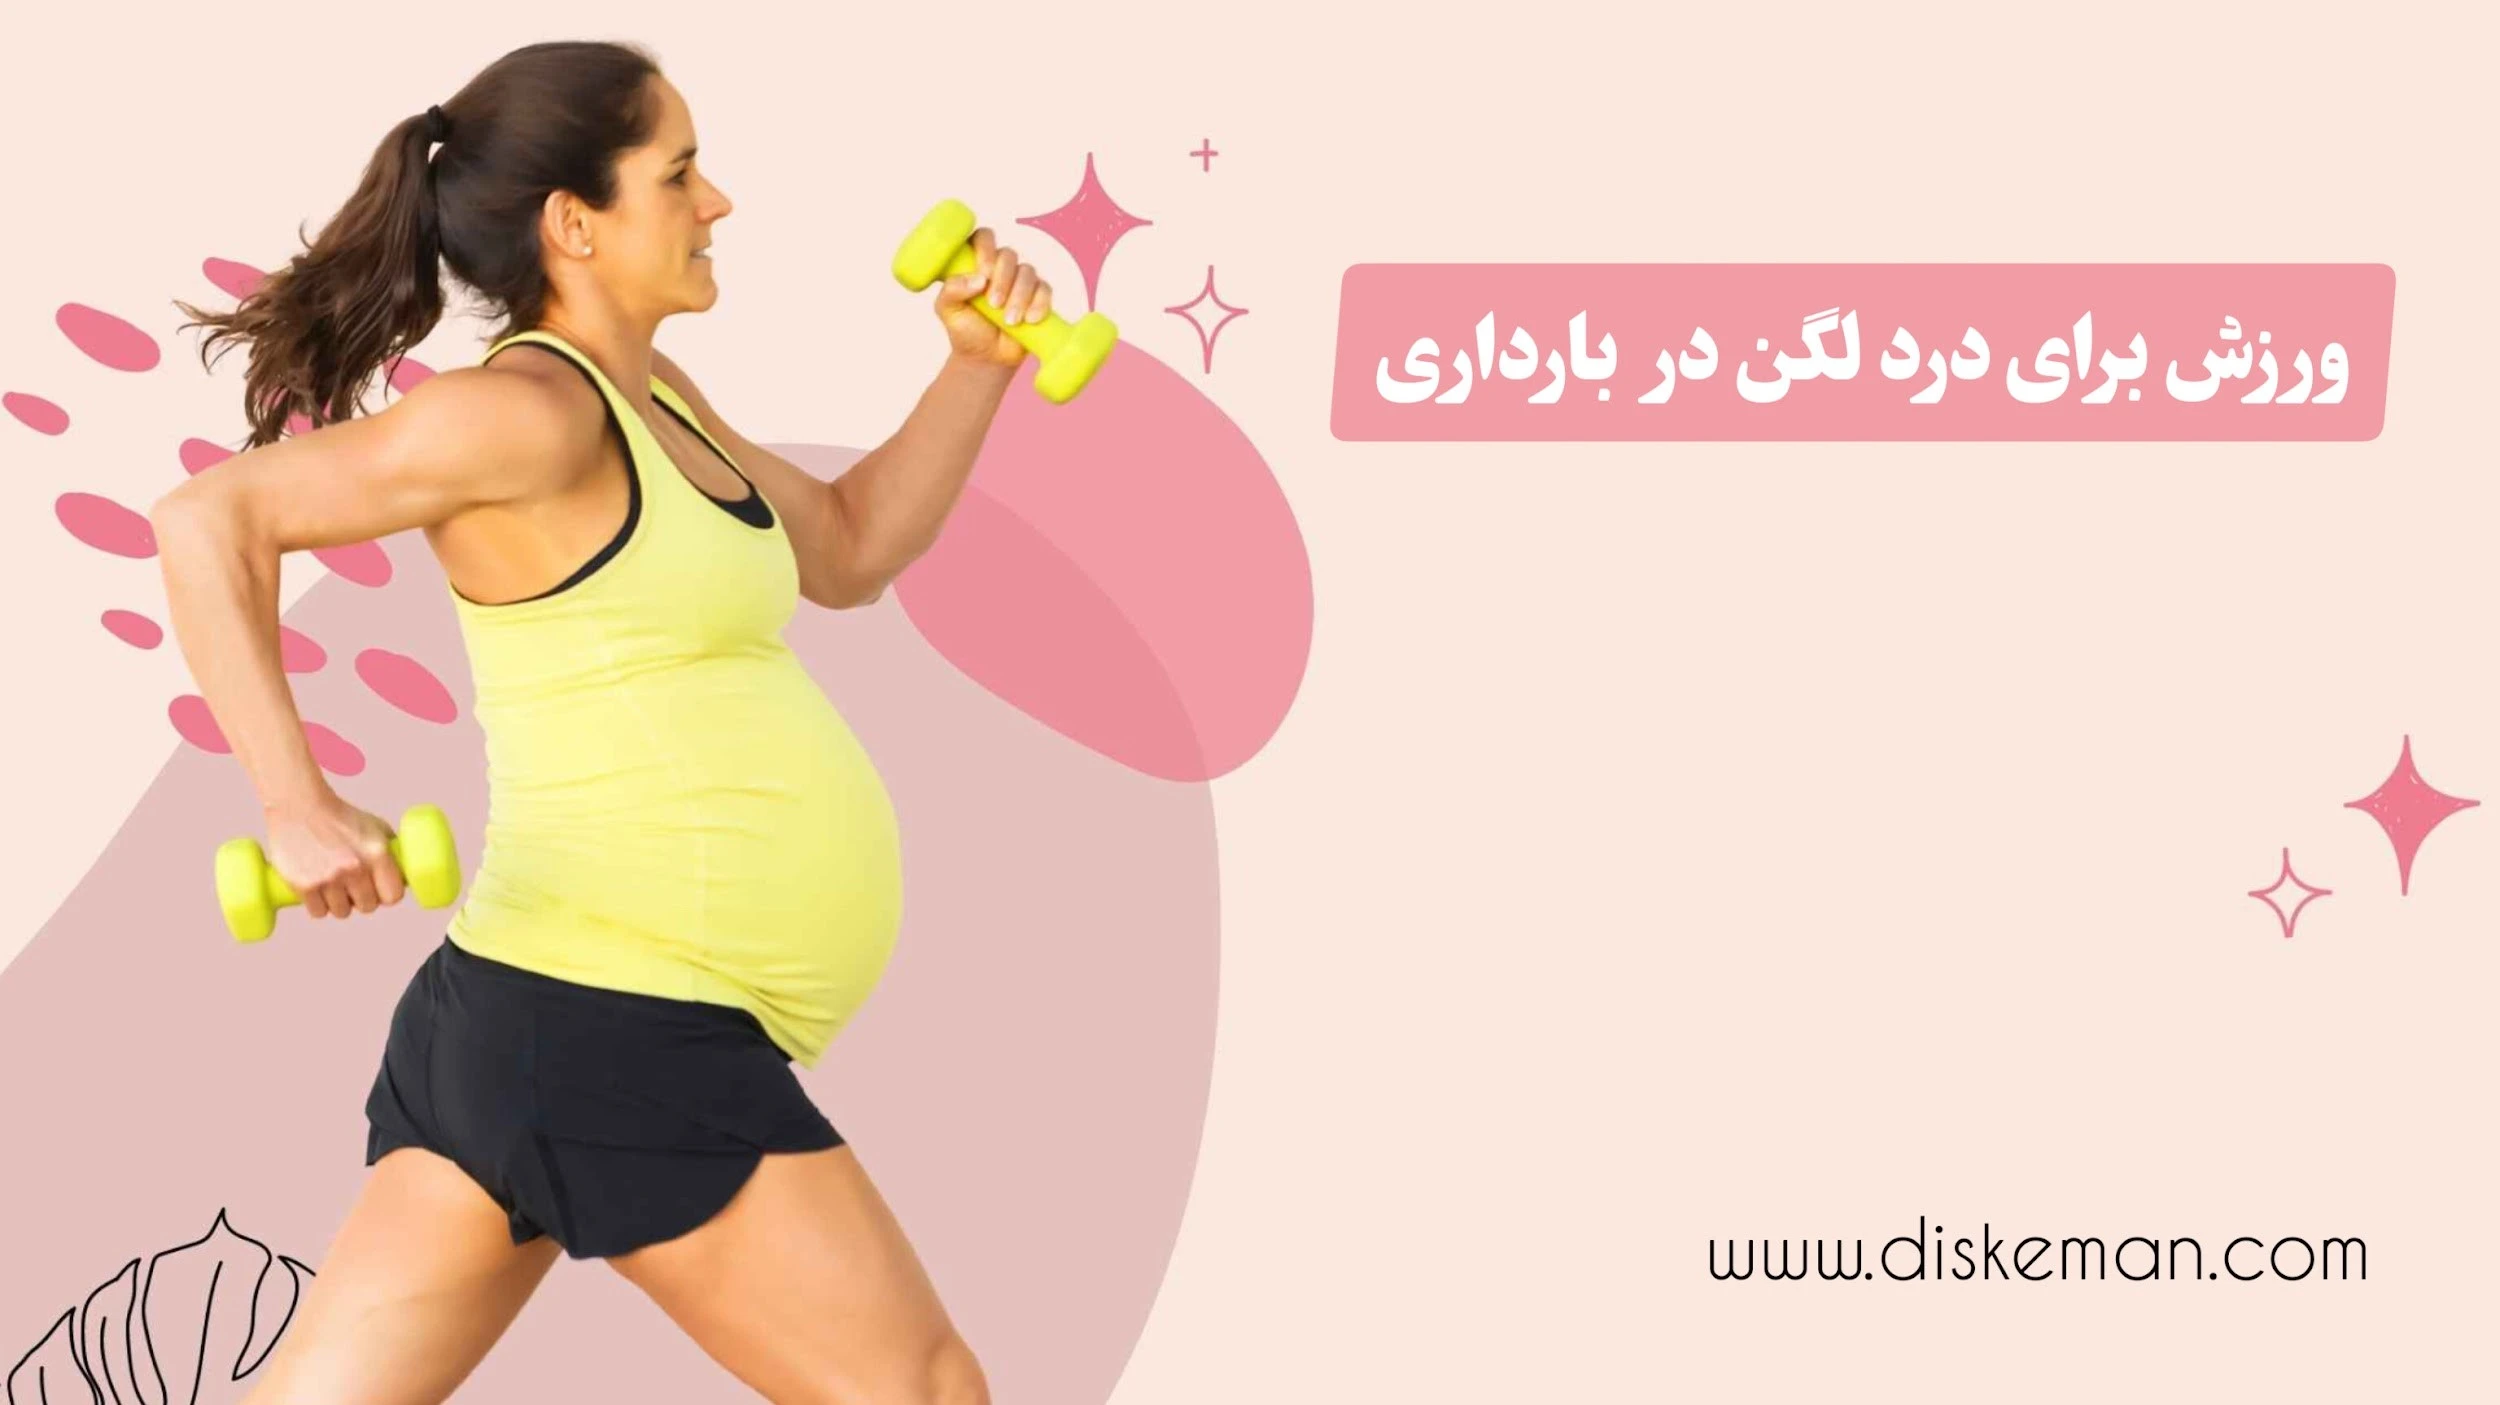 Exercise-hip-pain-pregnancy